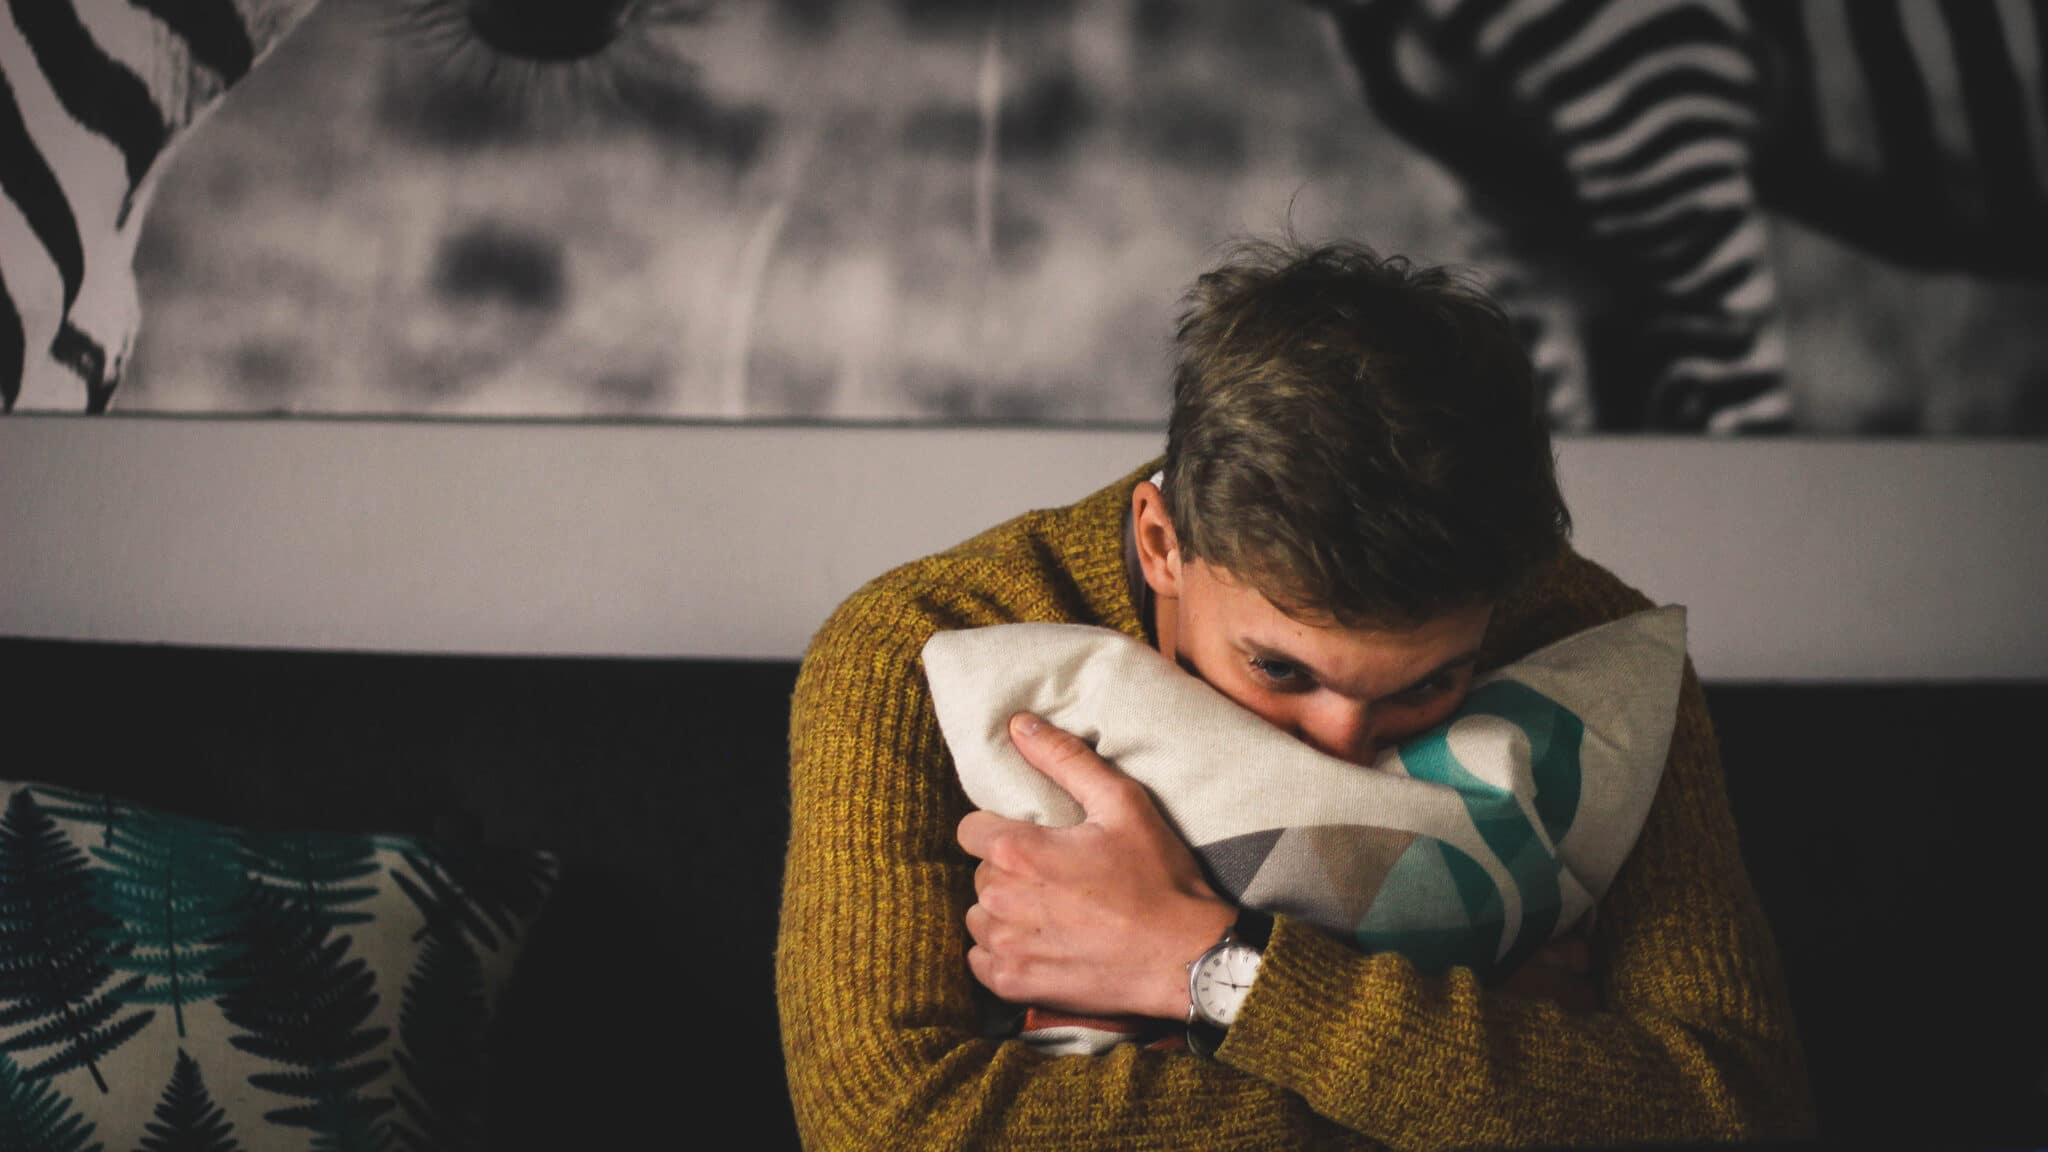 A man hugs a pillow in a bedroom